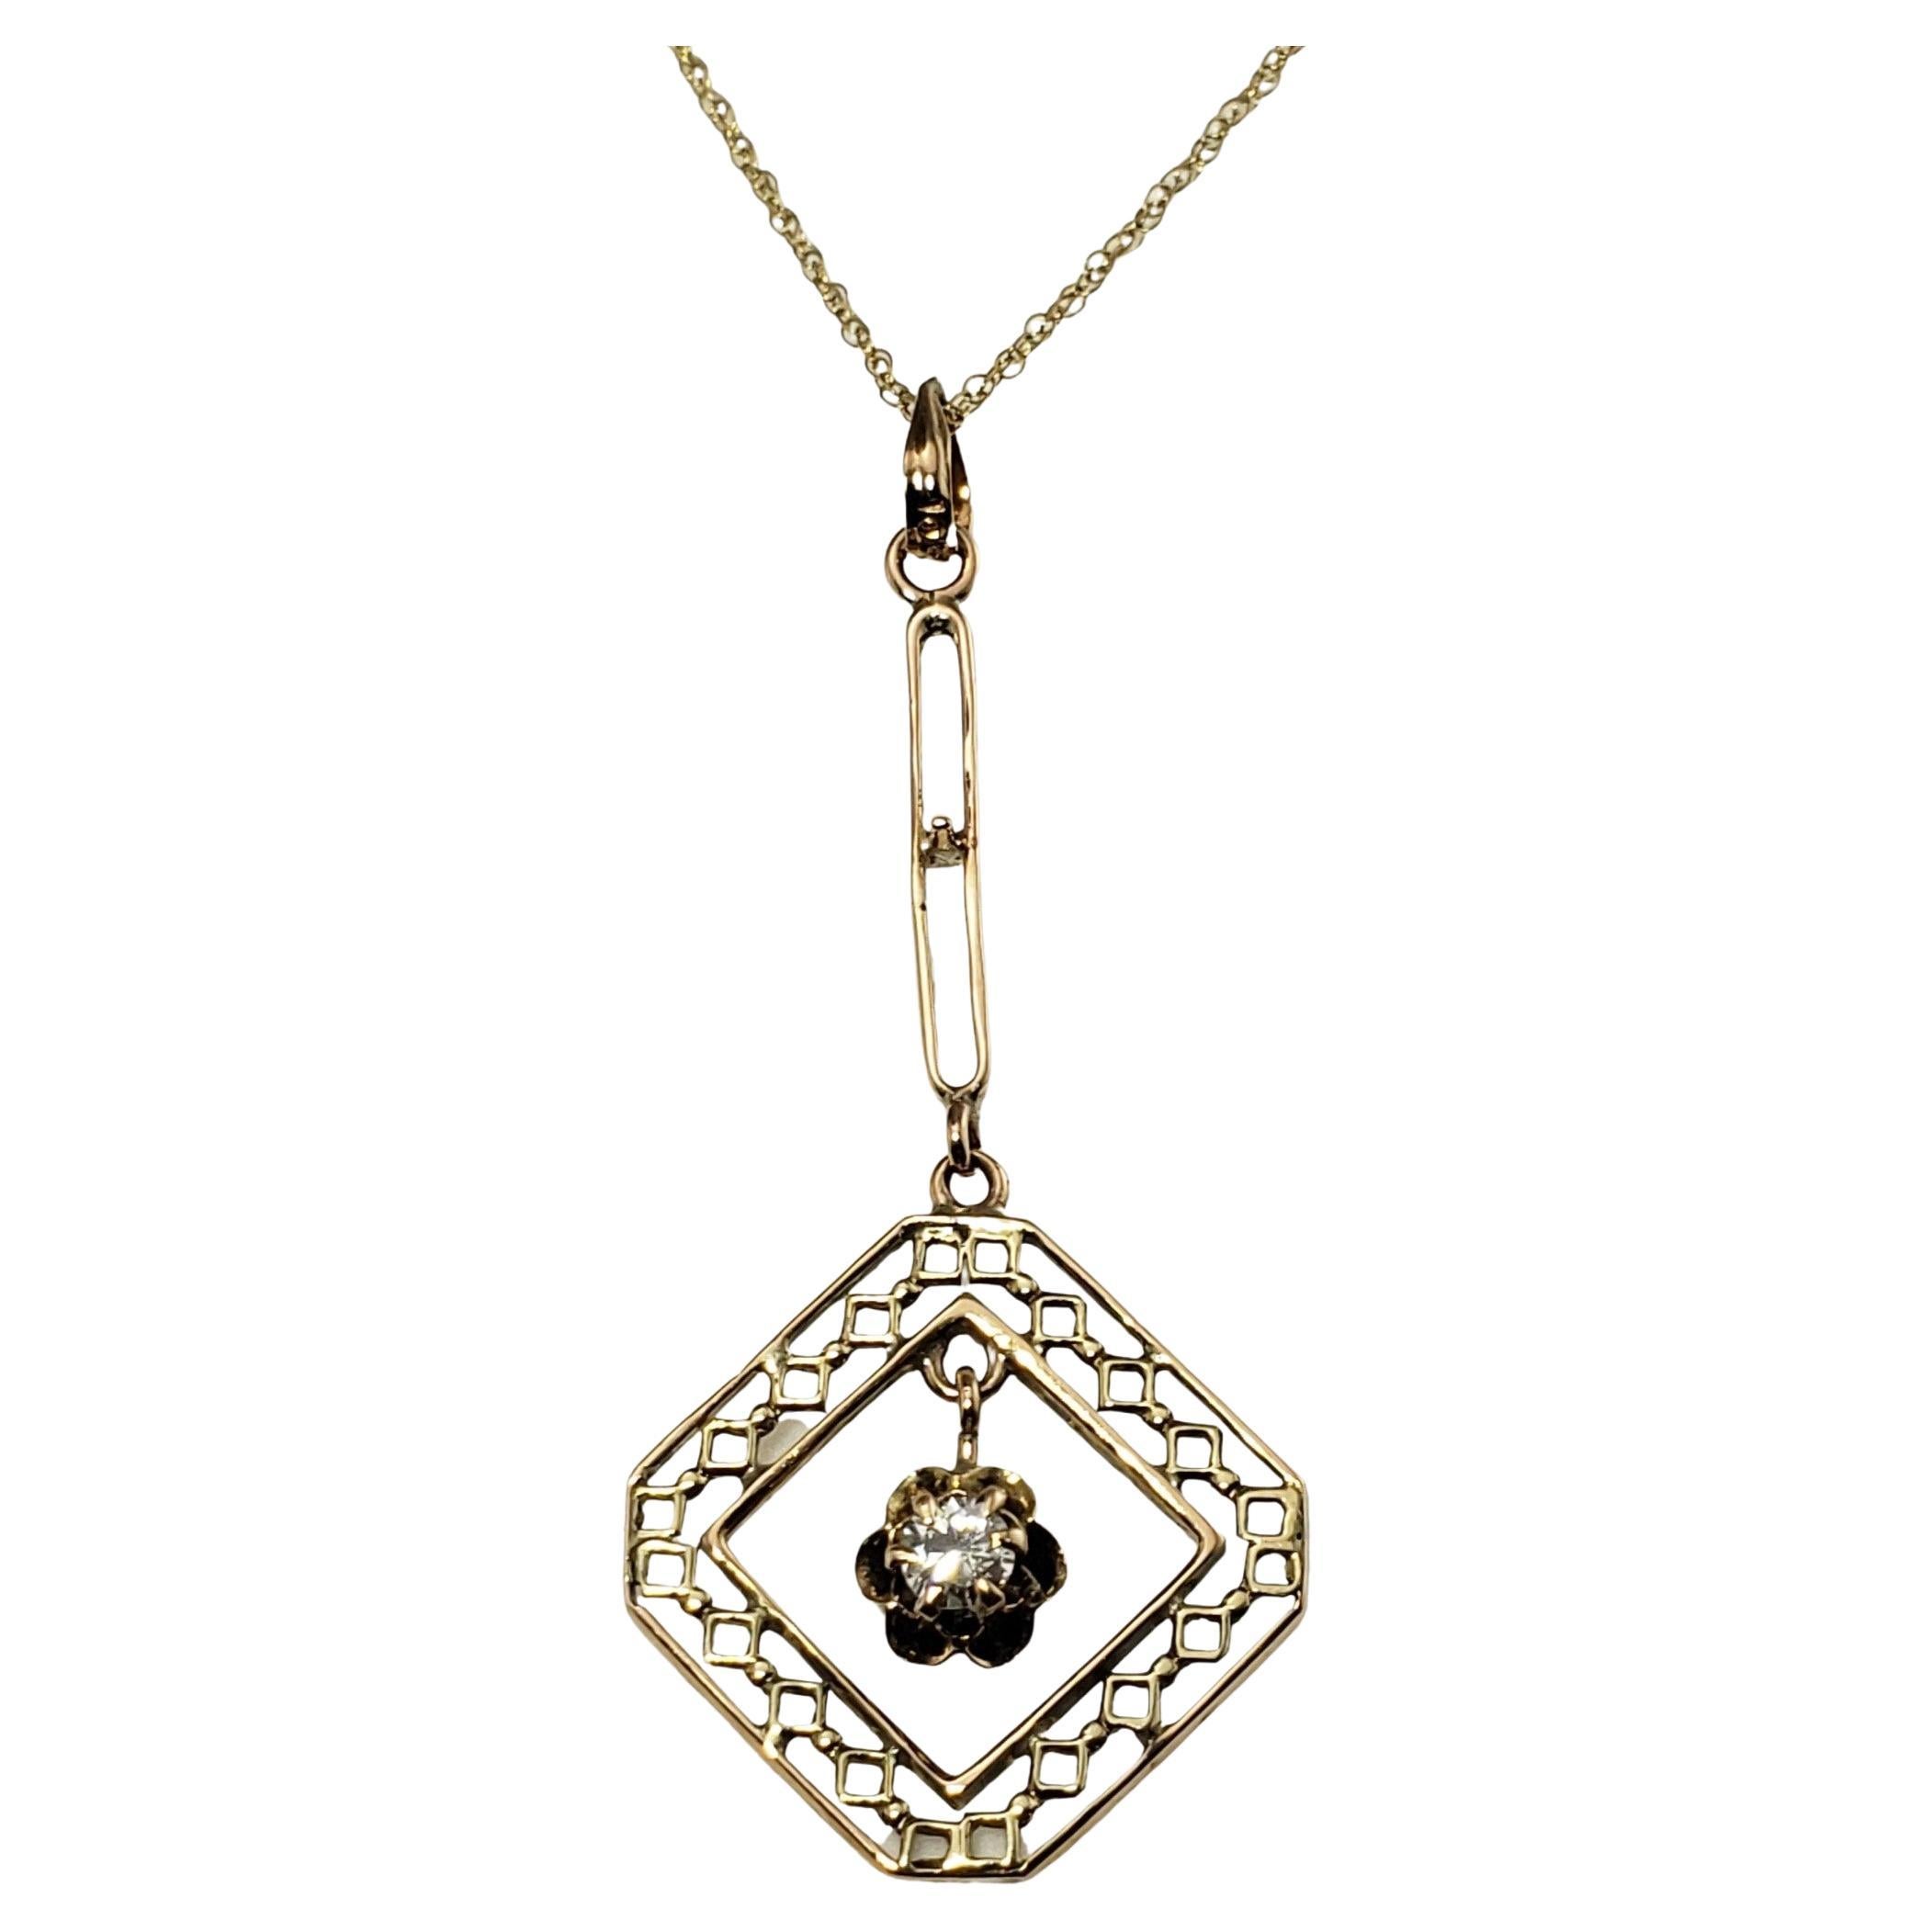 10 Karat Yellow Gold and Diamond Pendant Necklace